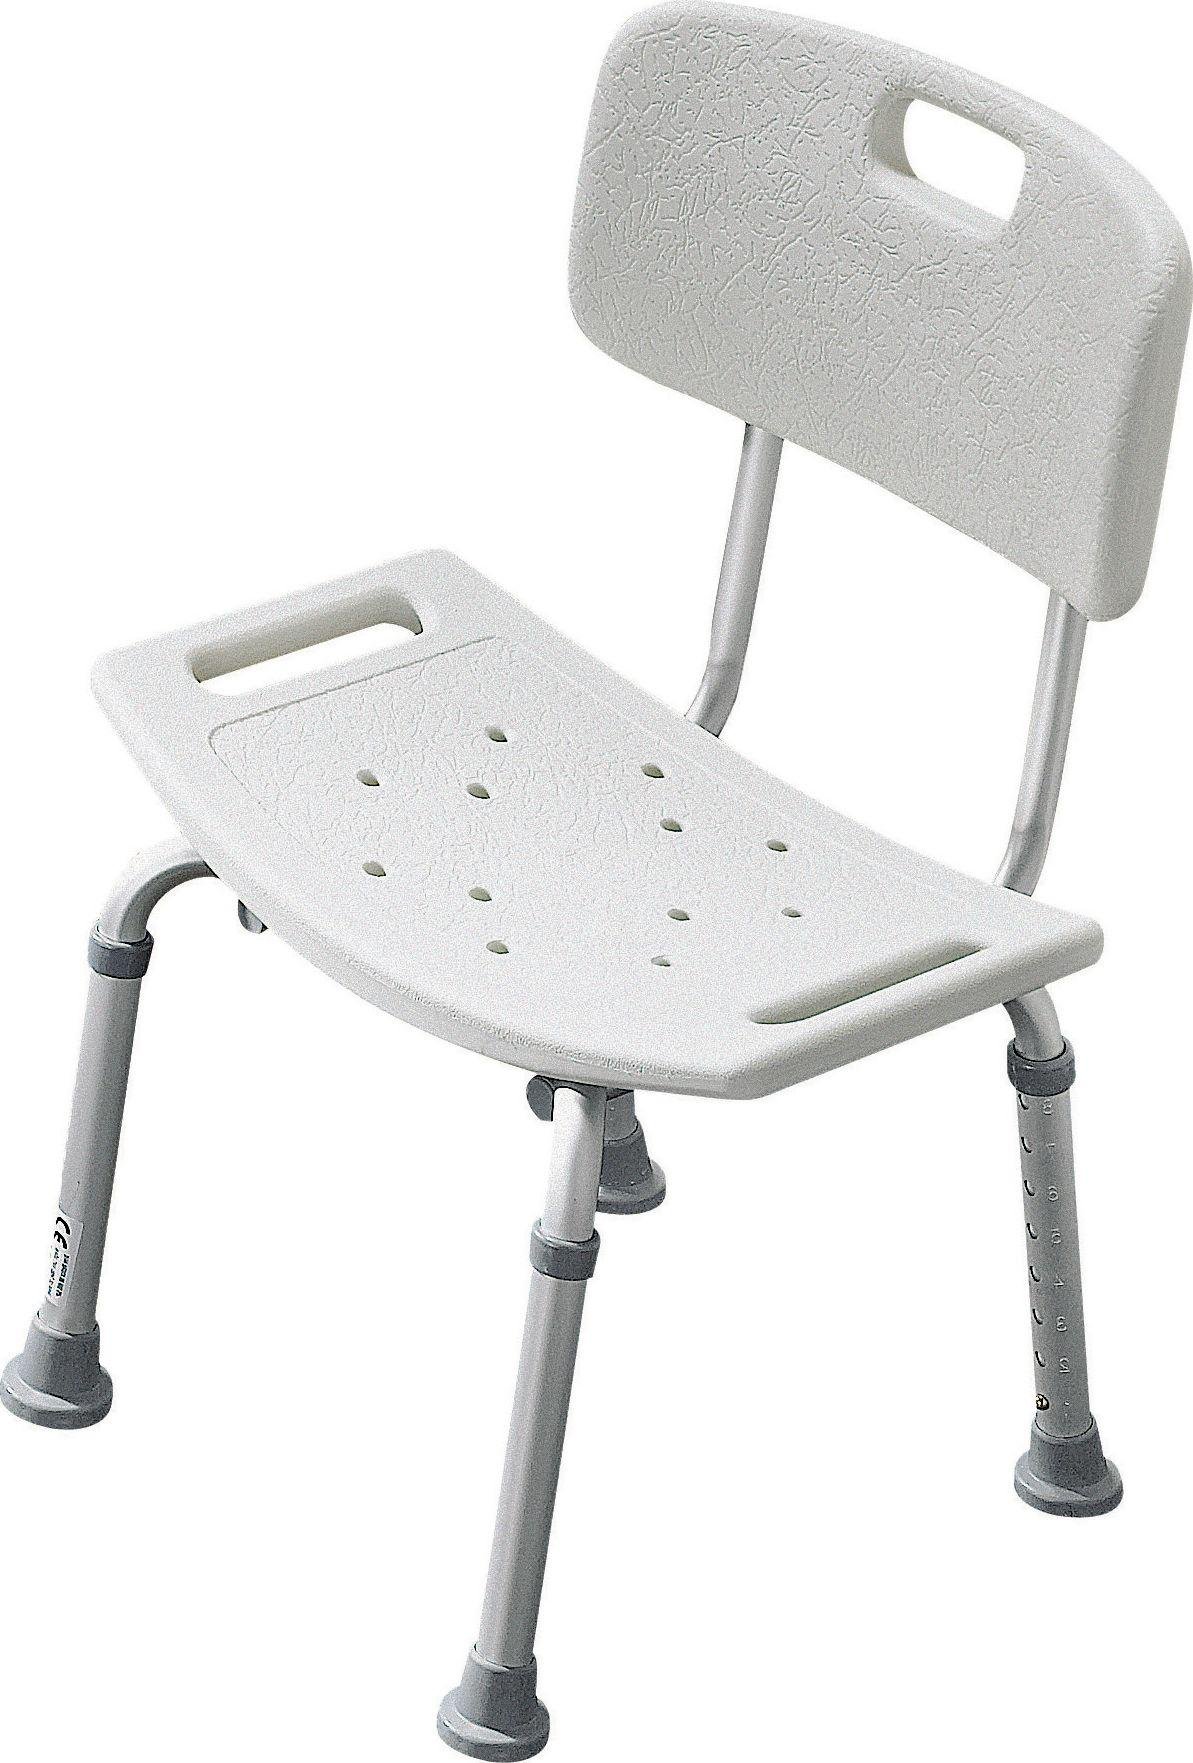 Buy Shower Seat with Backrest | Shower 